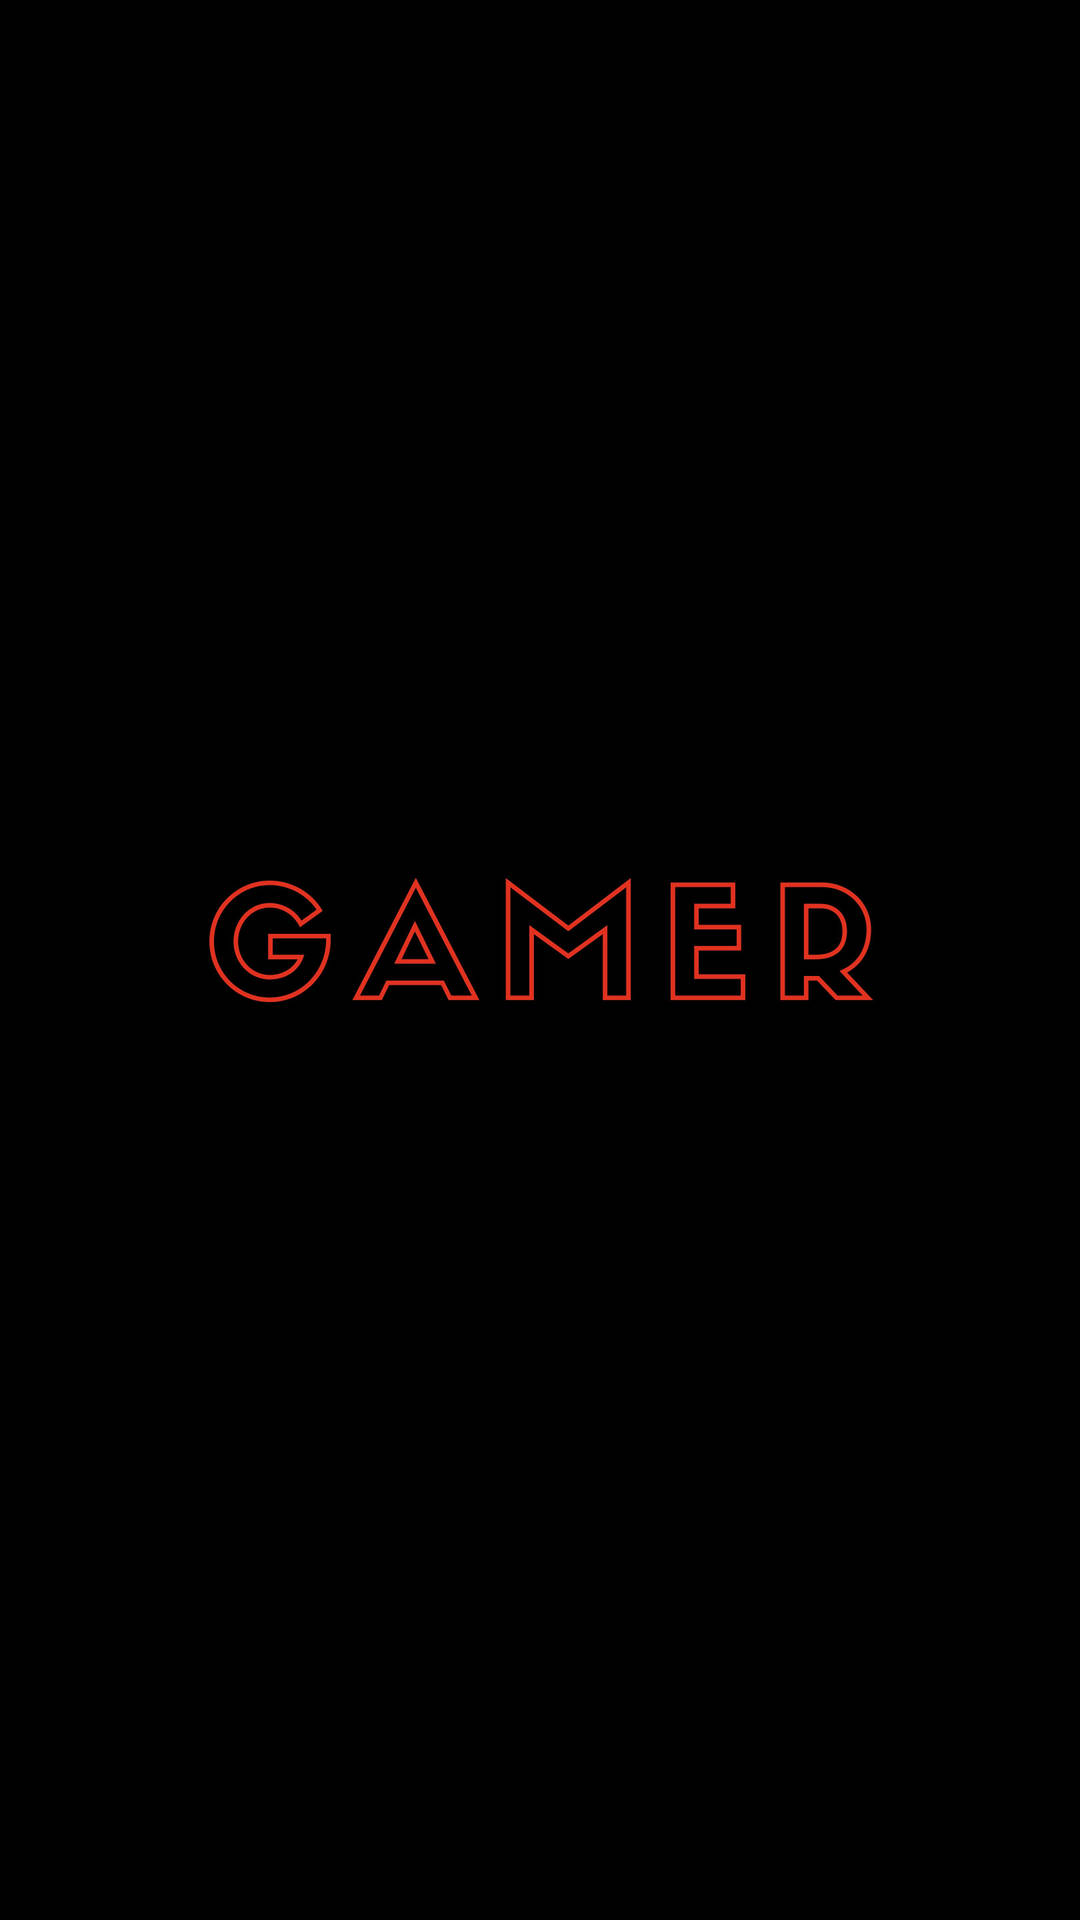 Gamer Logo In Black Picture